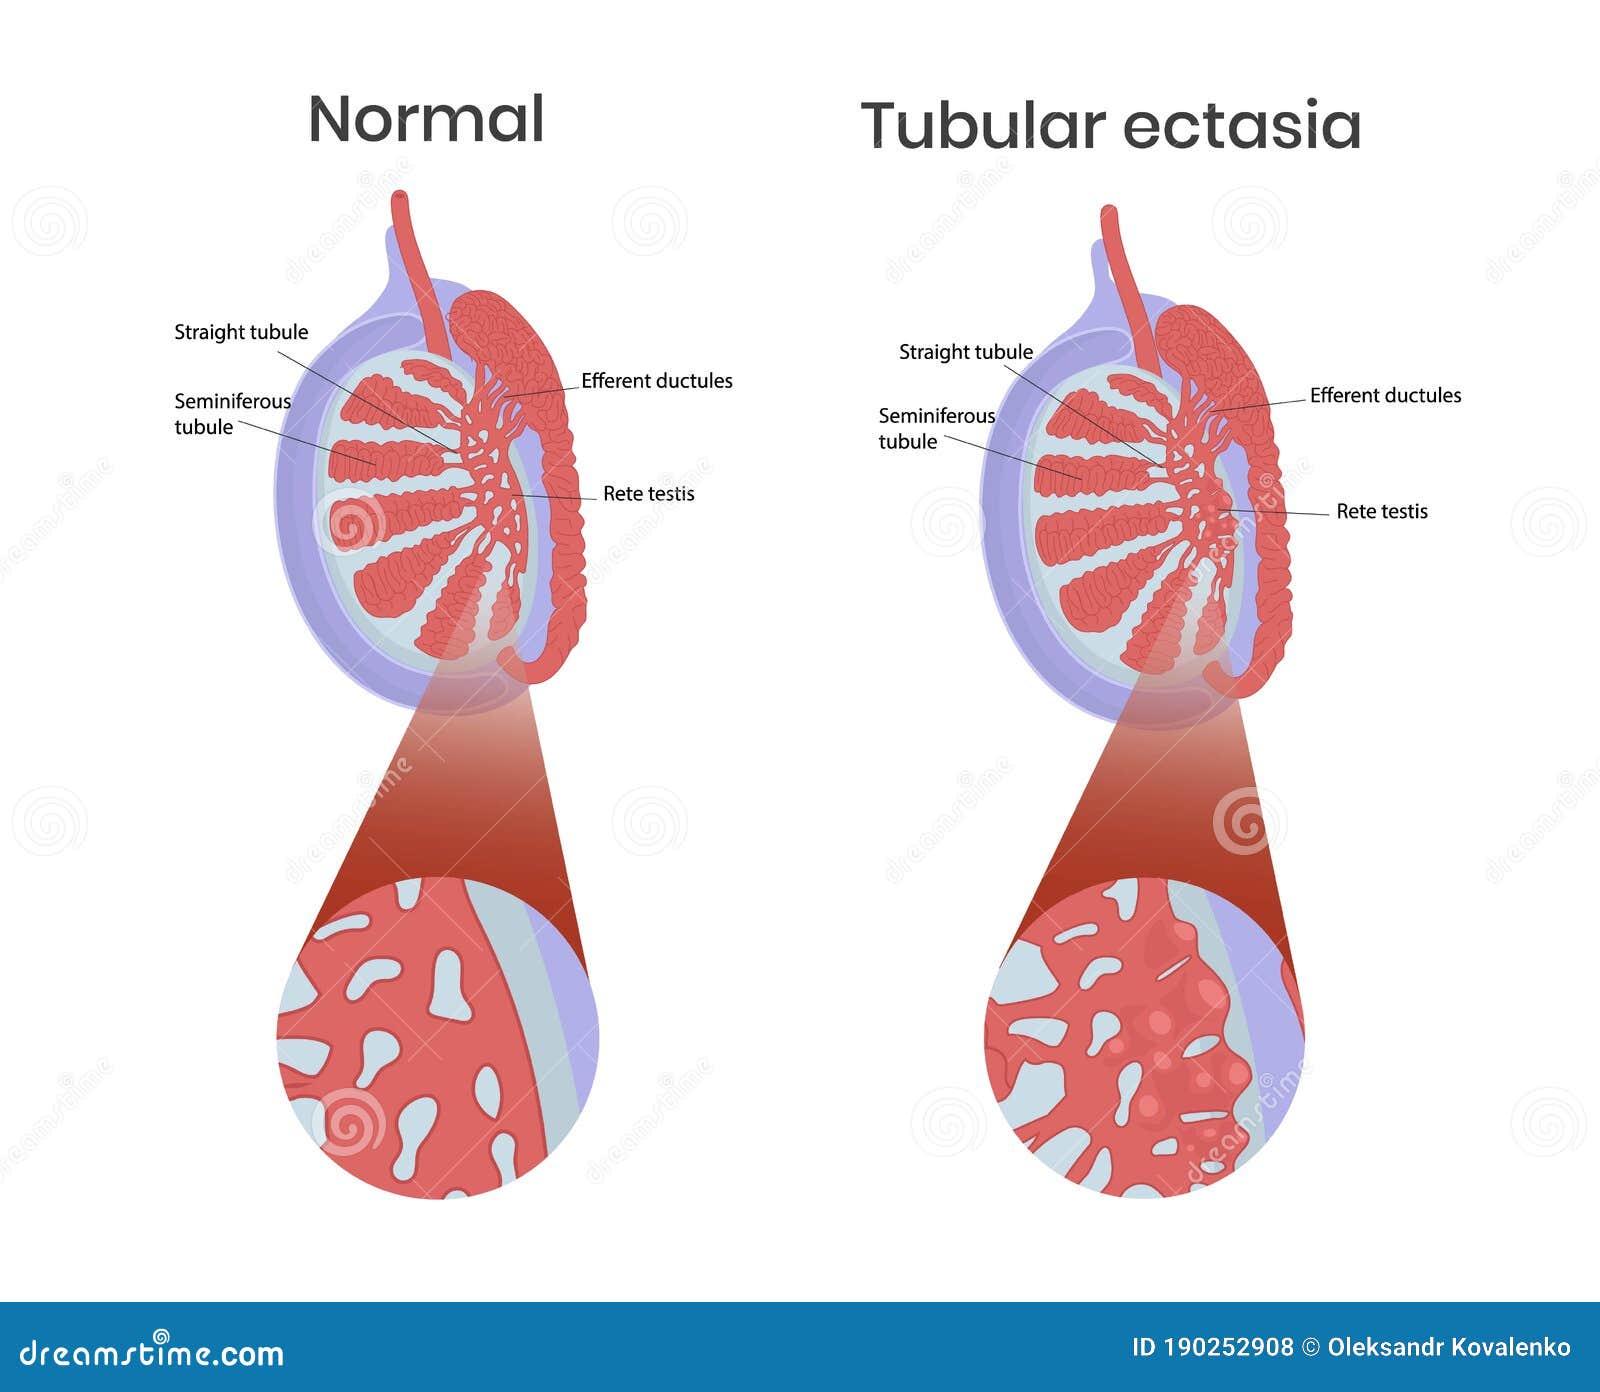 tubular ectasia of rete testis with normal testicular anatomy